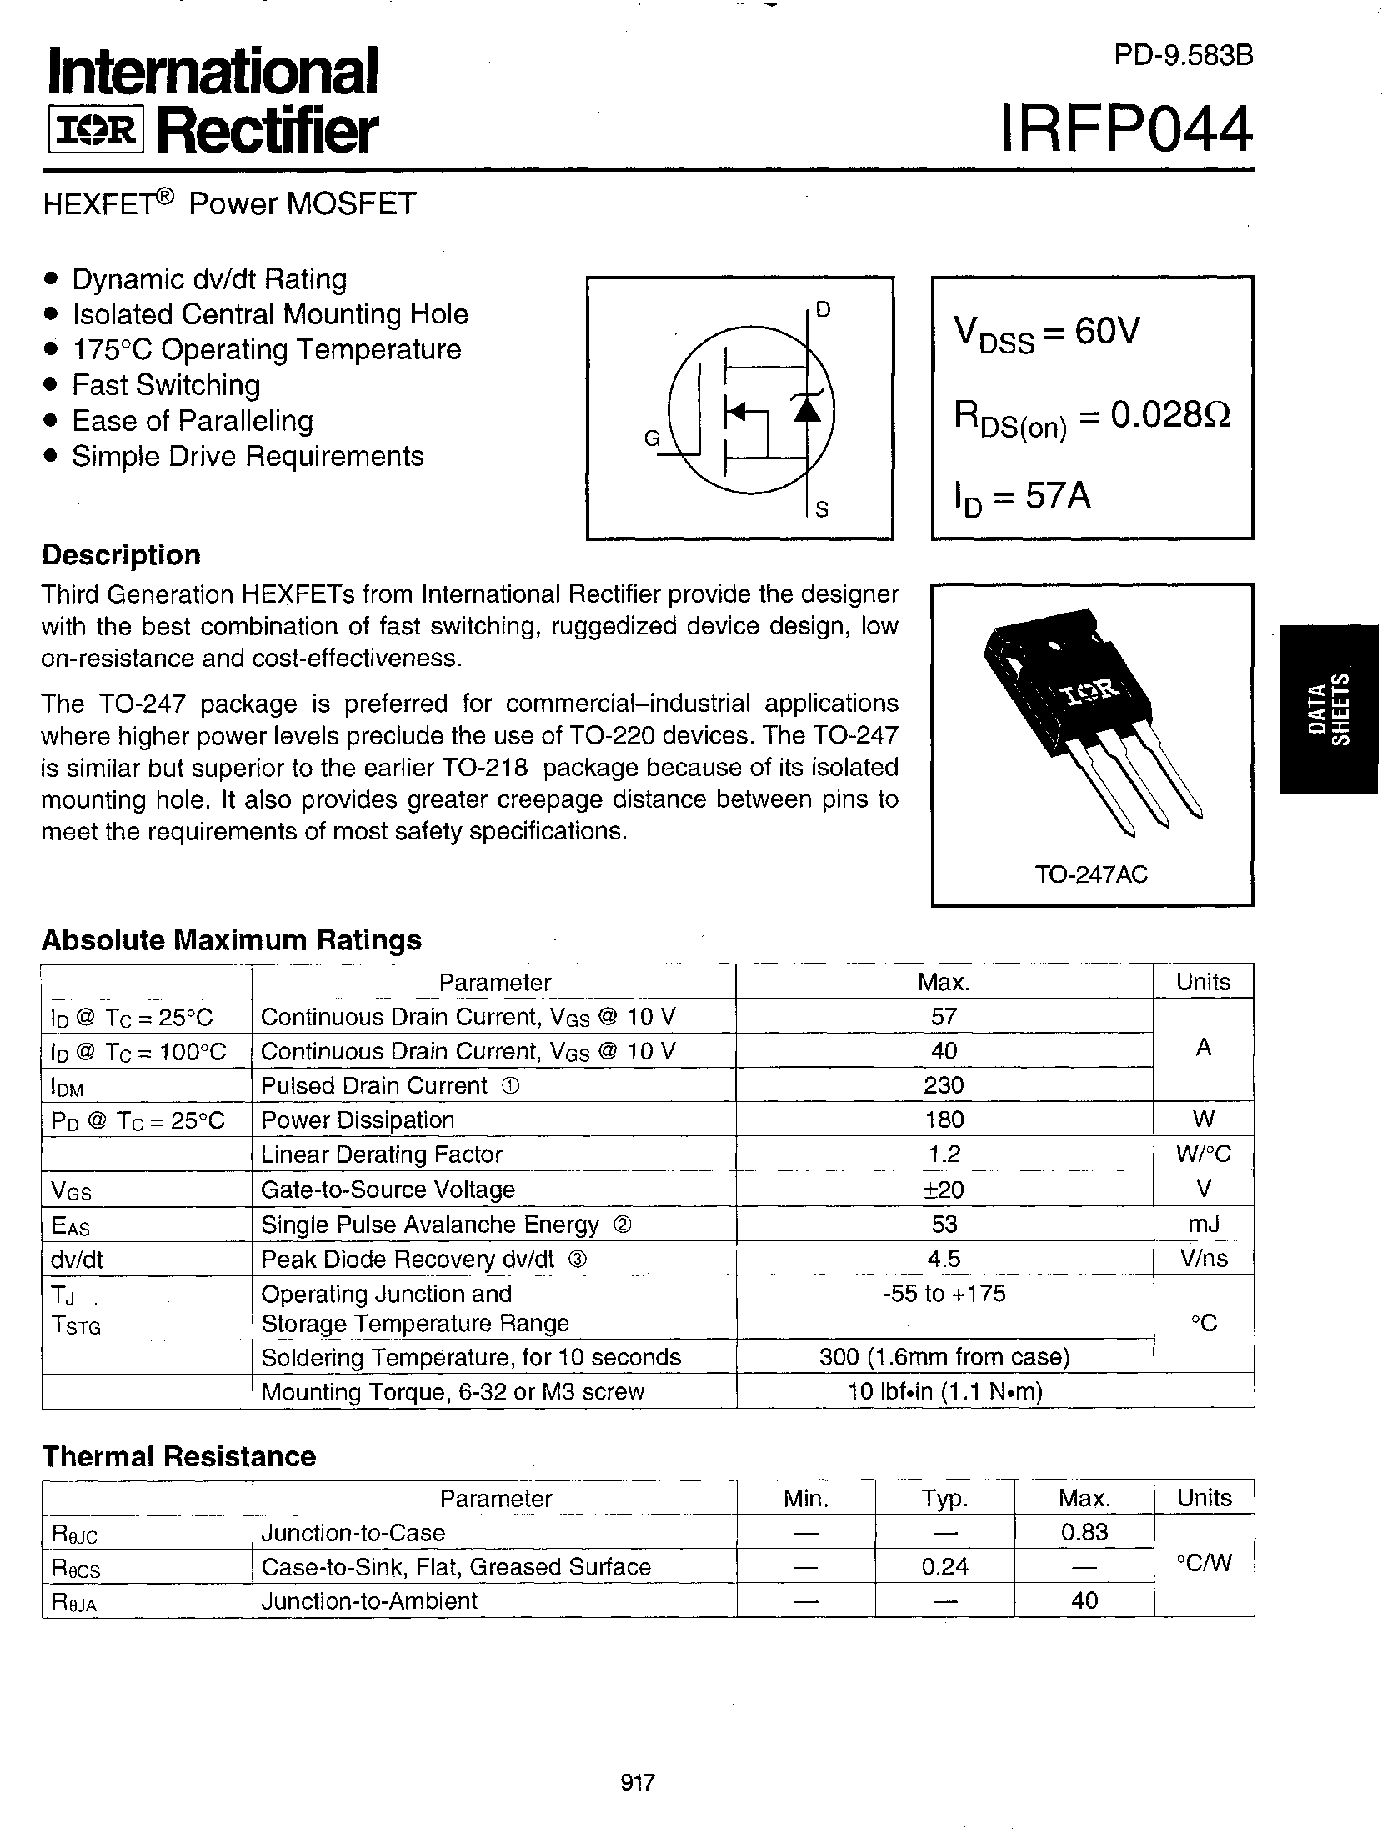 Datasheet IRFP044 - Power MOSFET page 1